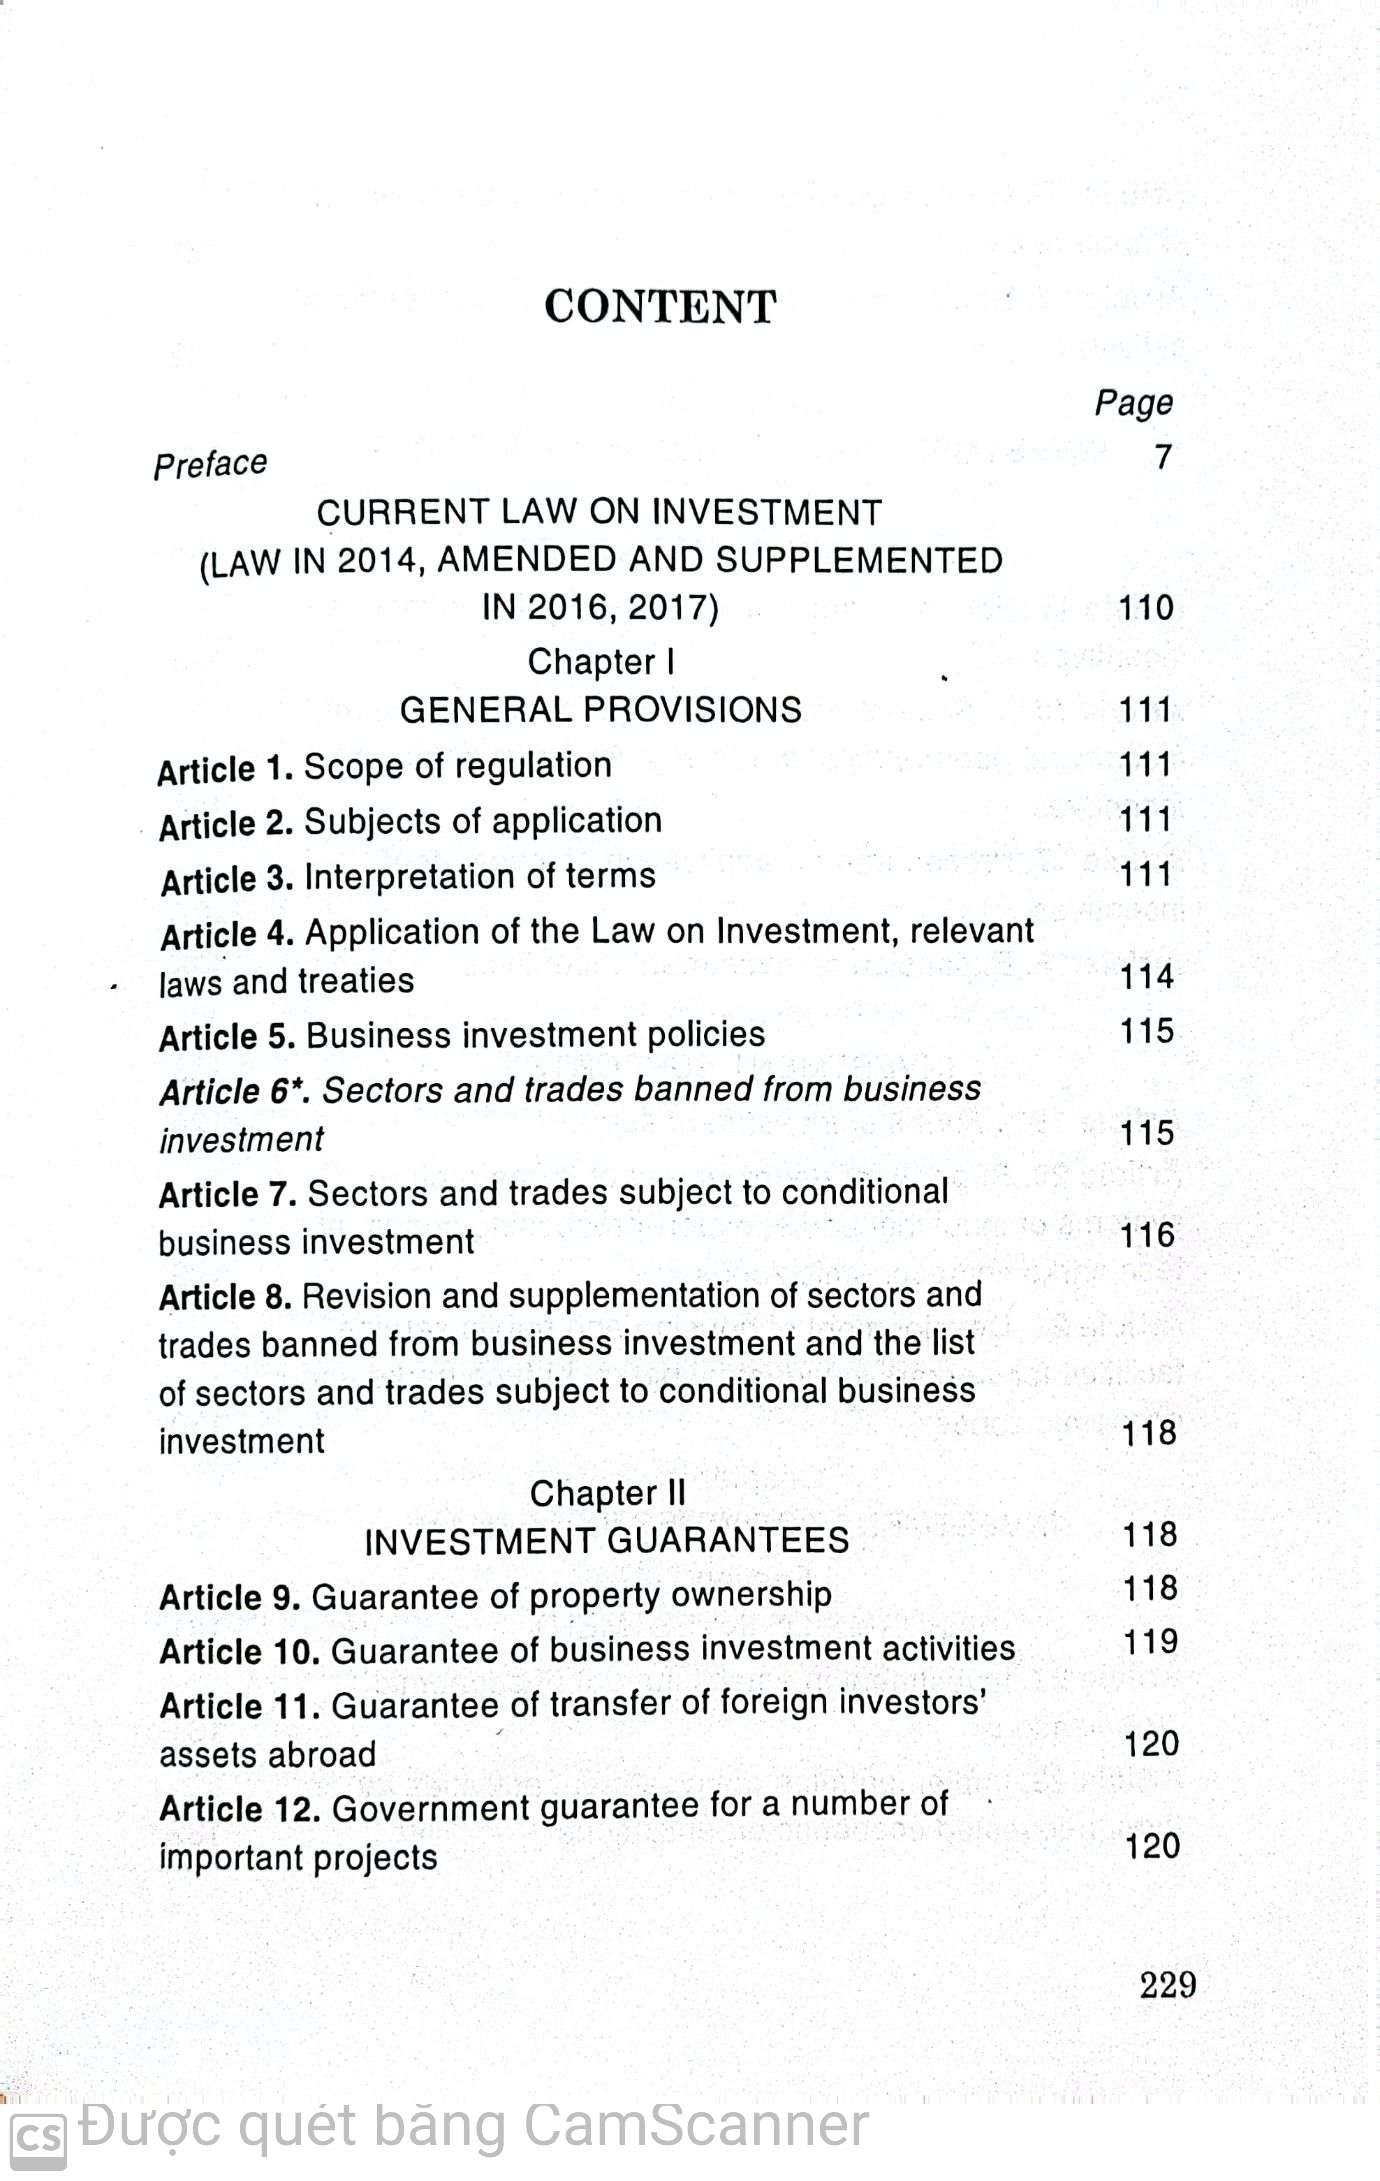 Luật đầu tư hiện hành (Luật năm 2014, sửa đổi, bổ sung năm 2016, 2017) (Song ngữ Việt - Anh) Current Law on Investment (Law in 2014, amended and supplementde in 2016, 2017) (Vietnamese - English)